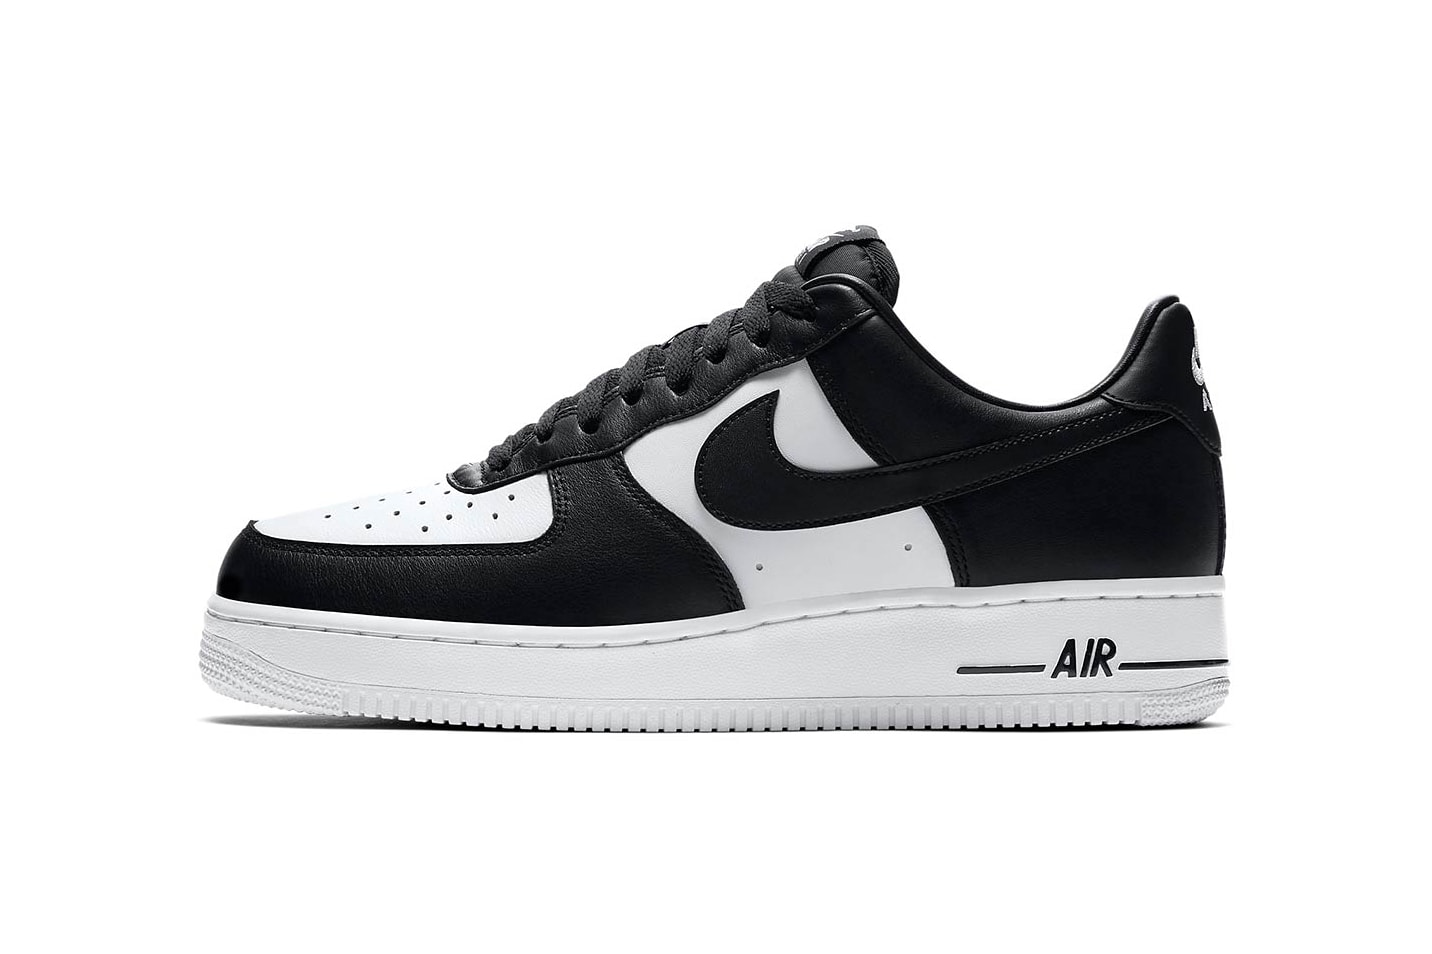 Nike Air Force 1 Low Tuxedo may 2018 spring release date info drop sneakers shoes footwear